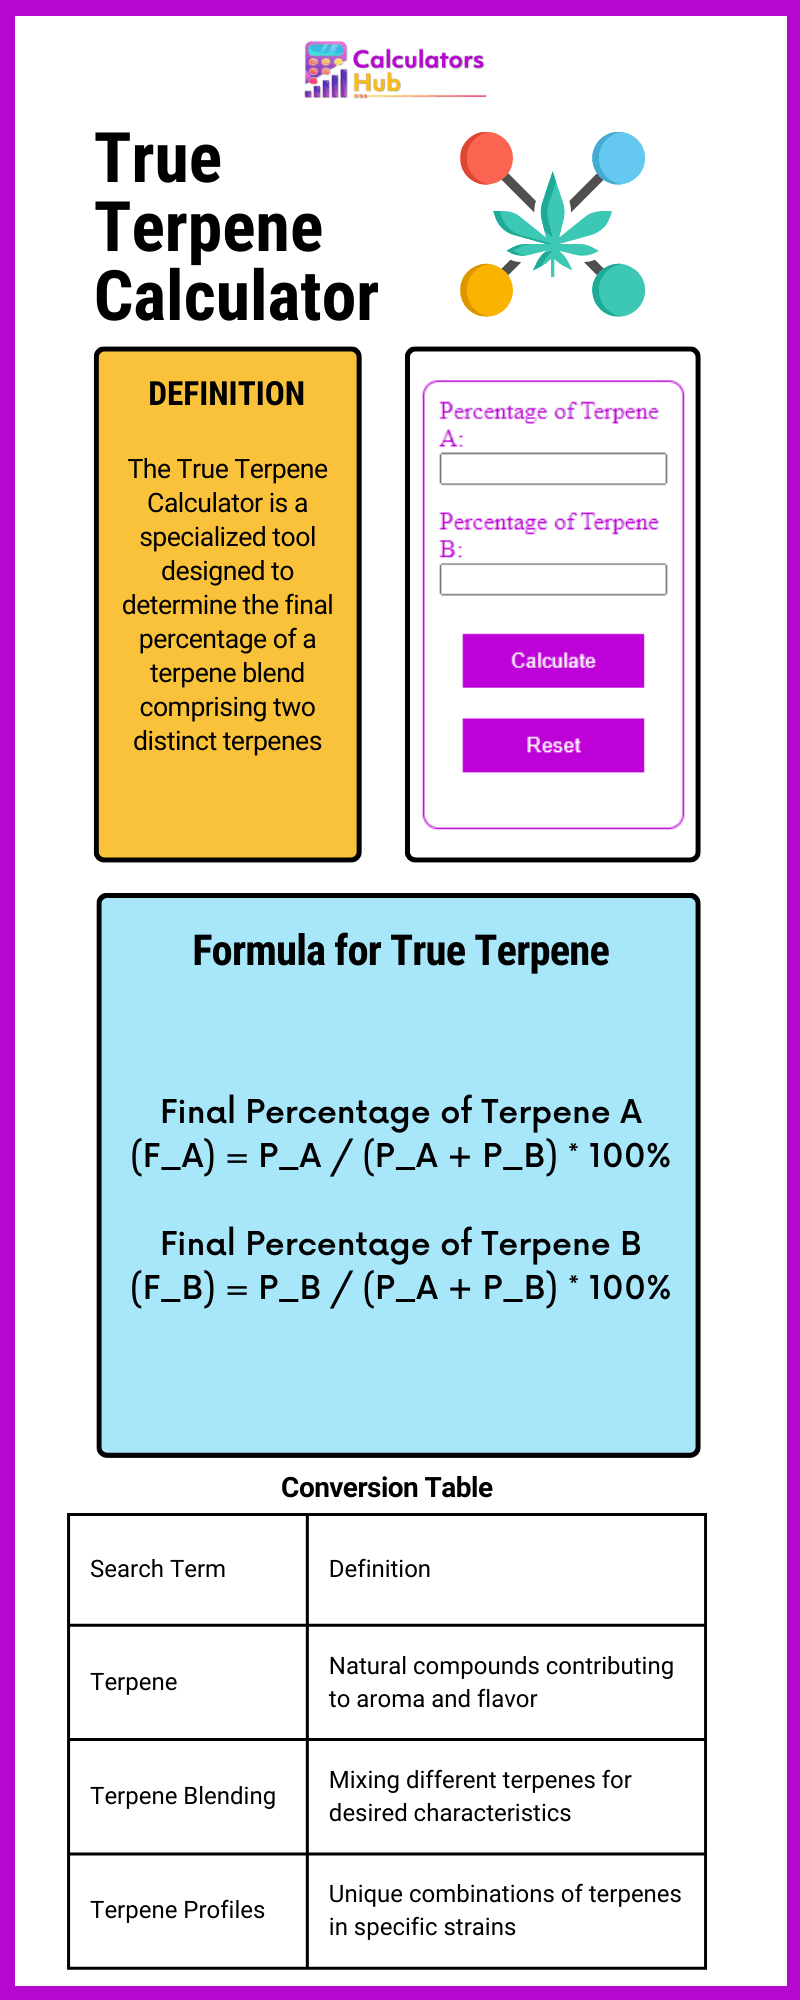 True Terpene Calculator